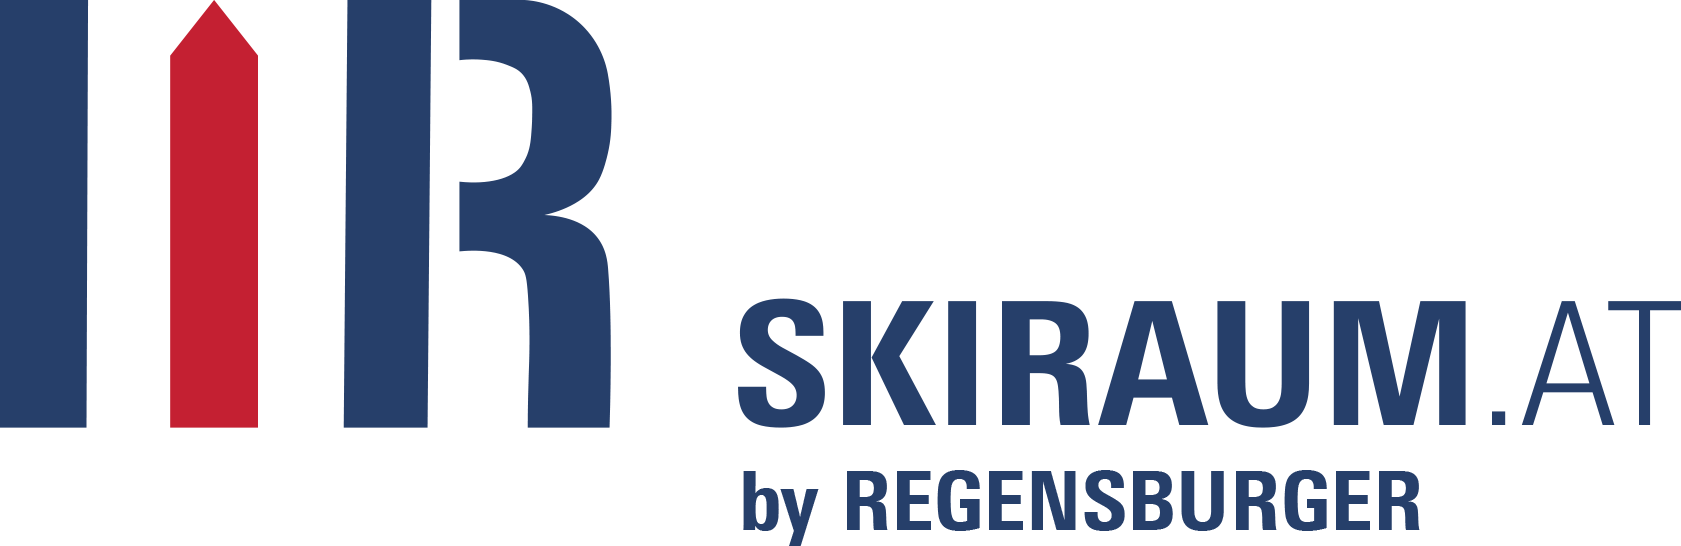 Logo Regensburger Handels GmbH | Skiraum